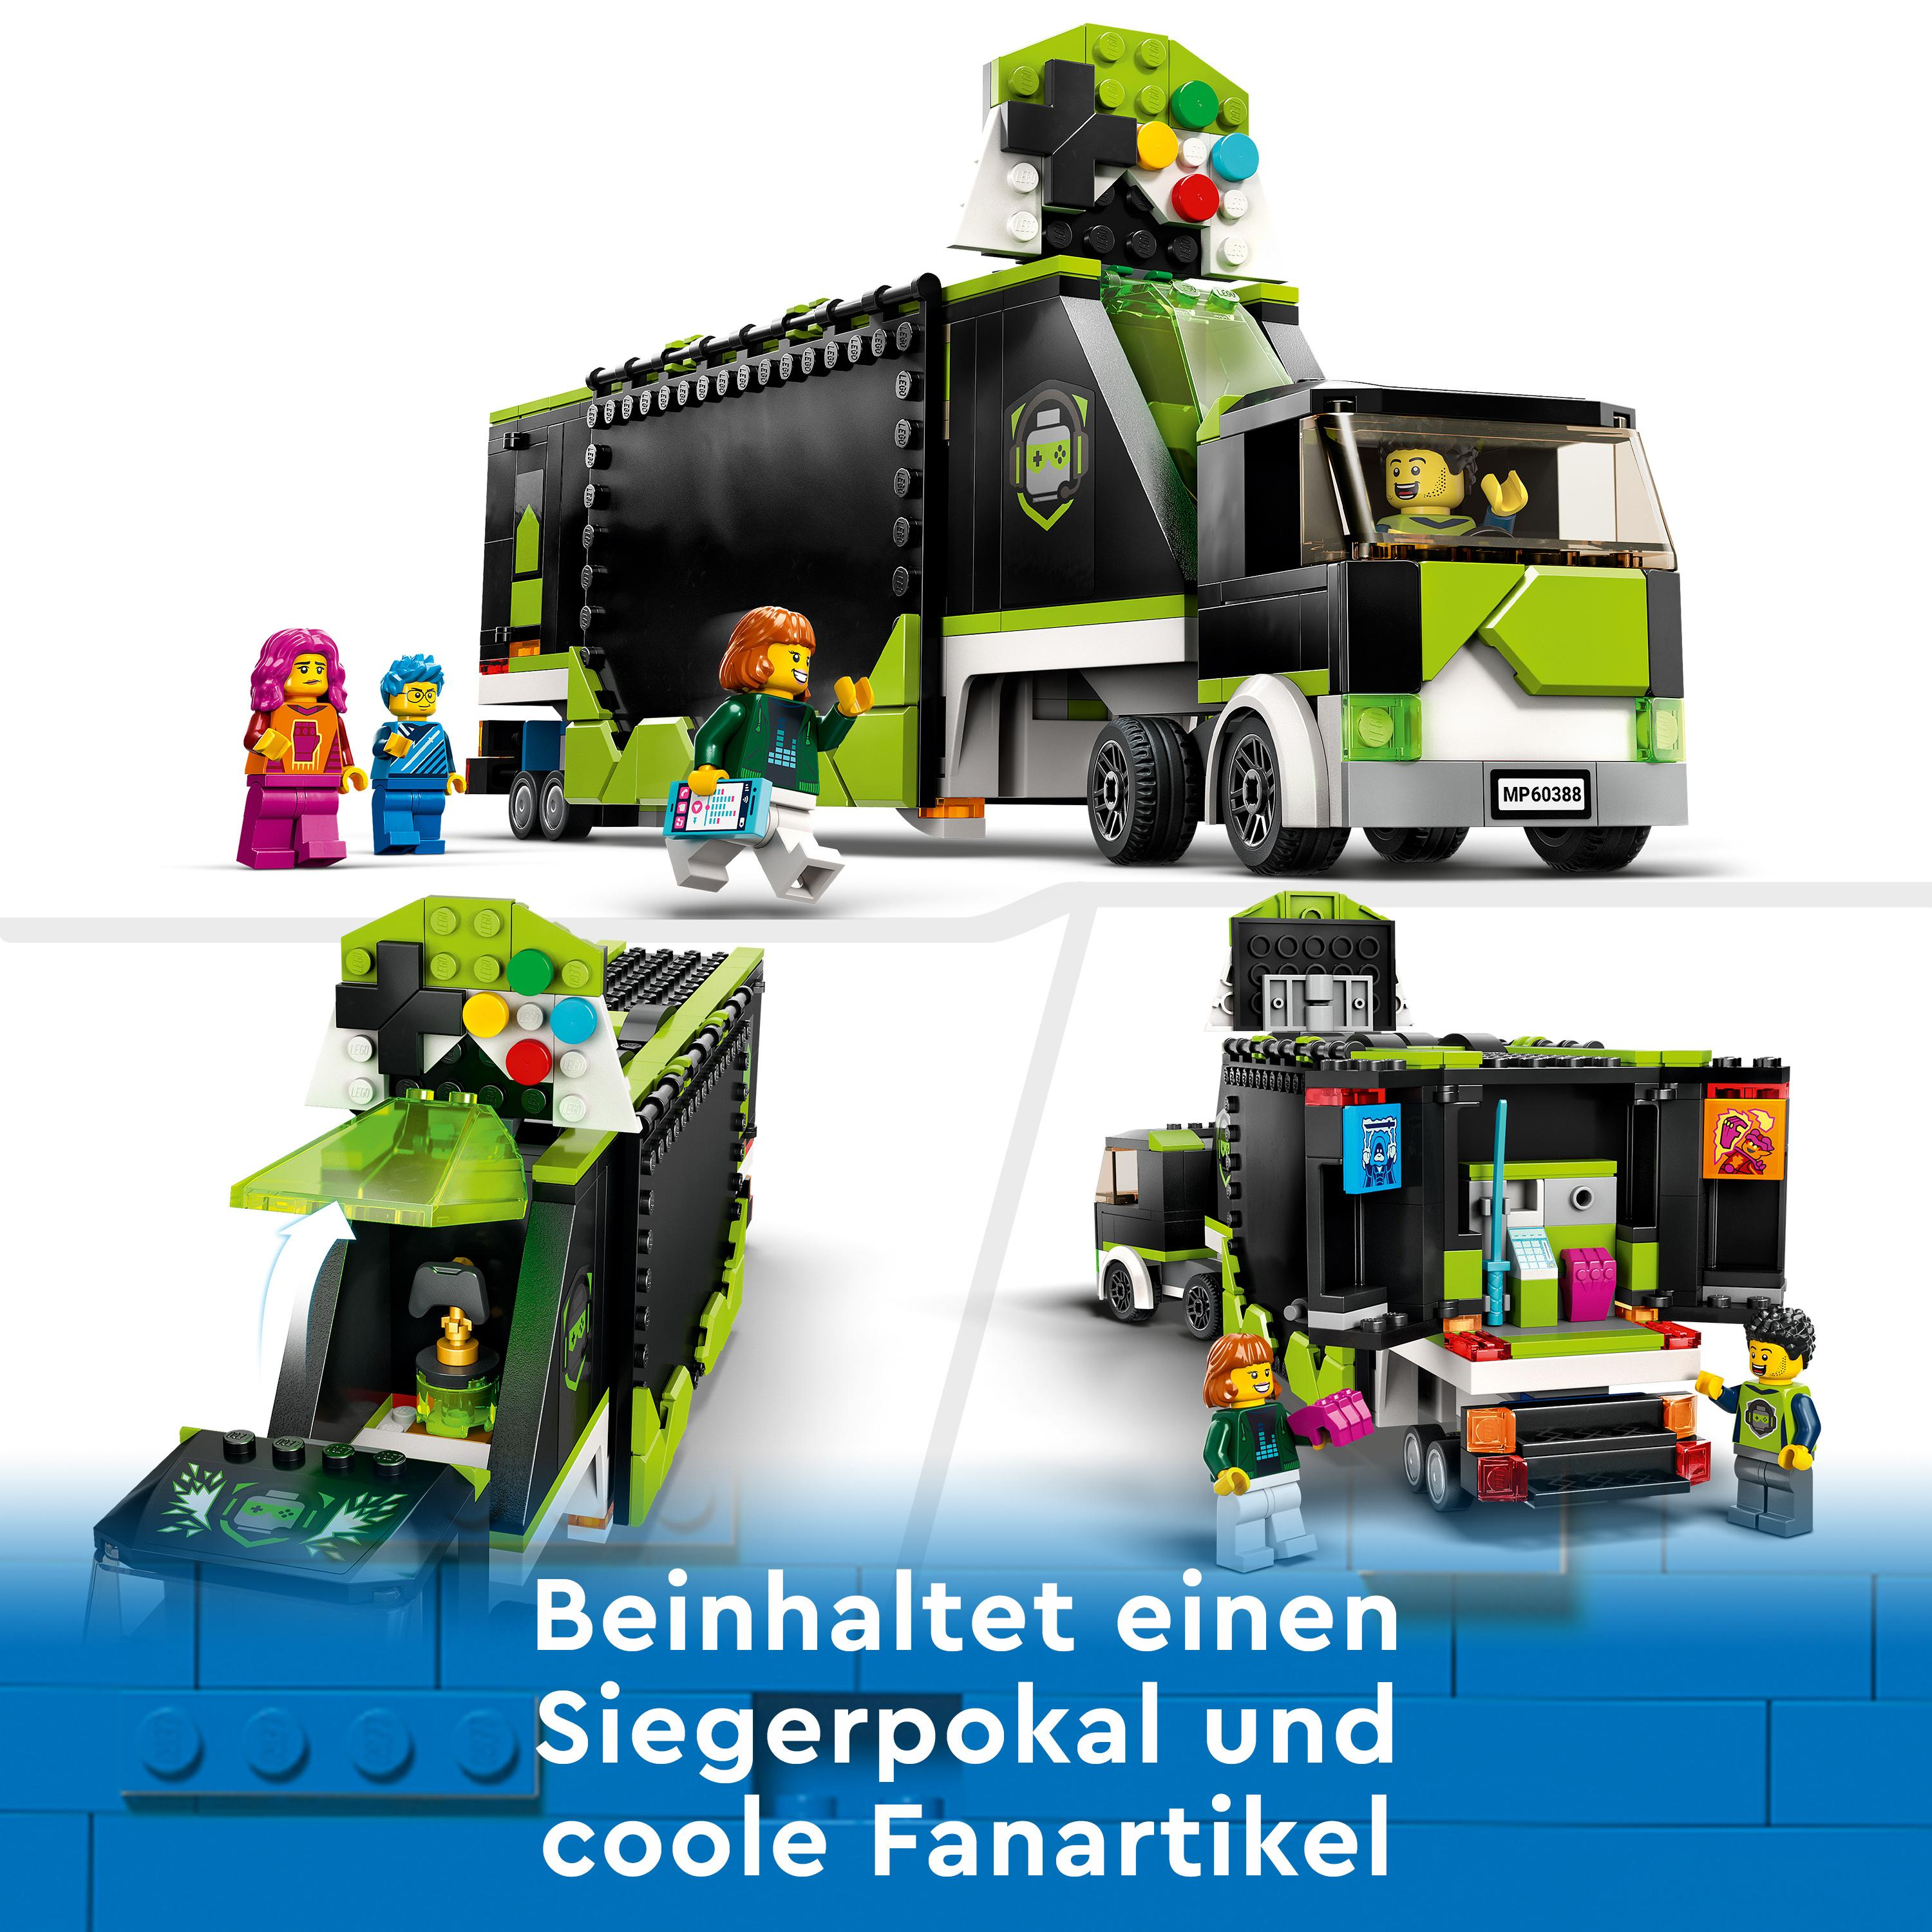 Mehrfarbig Bausatz, LEGO Gaming Truck 60388 City Turnier